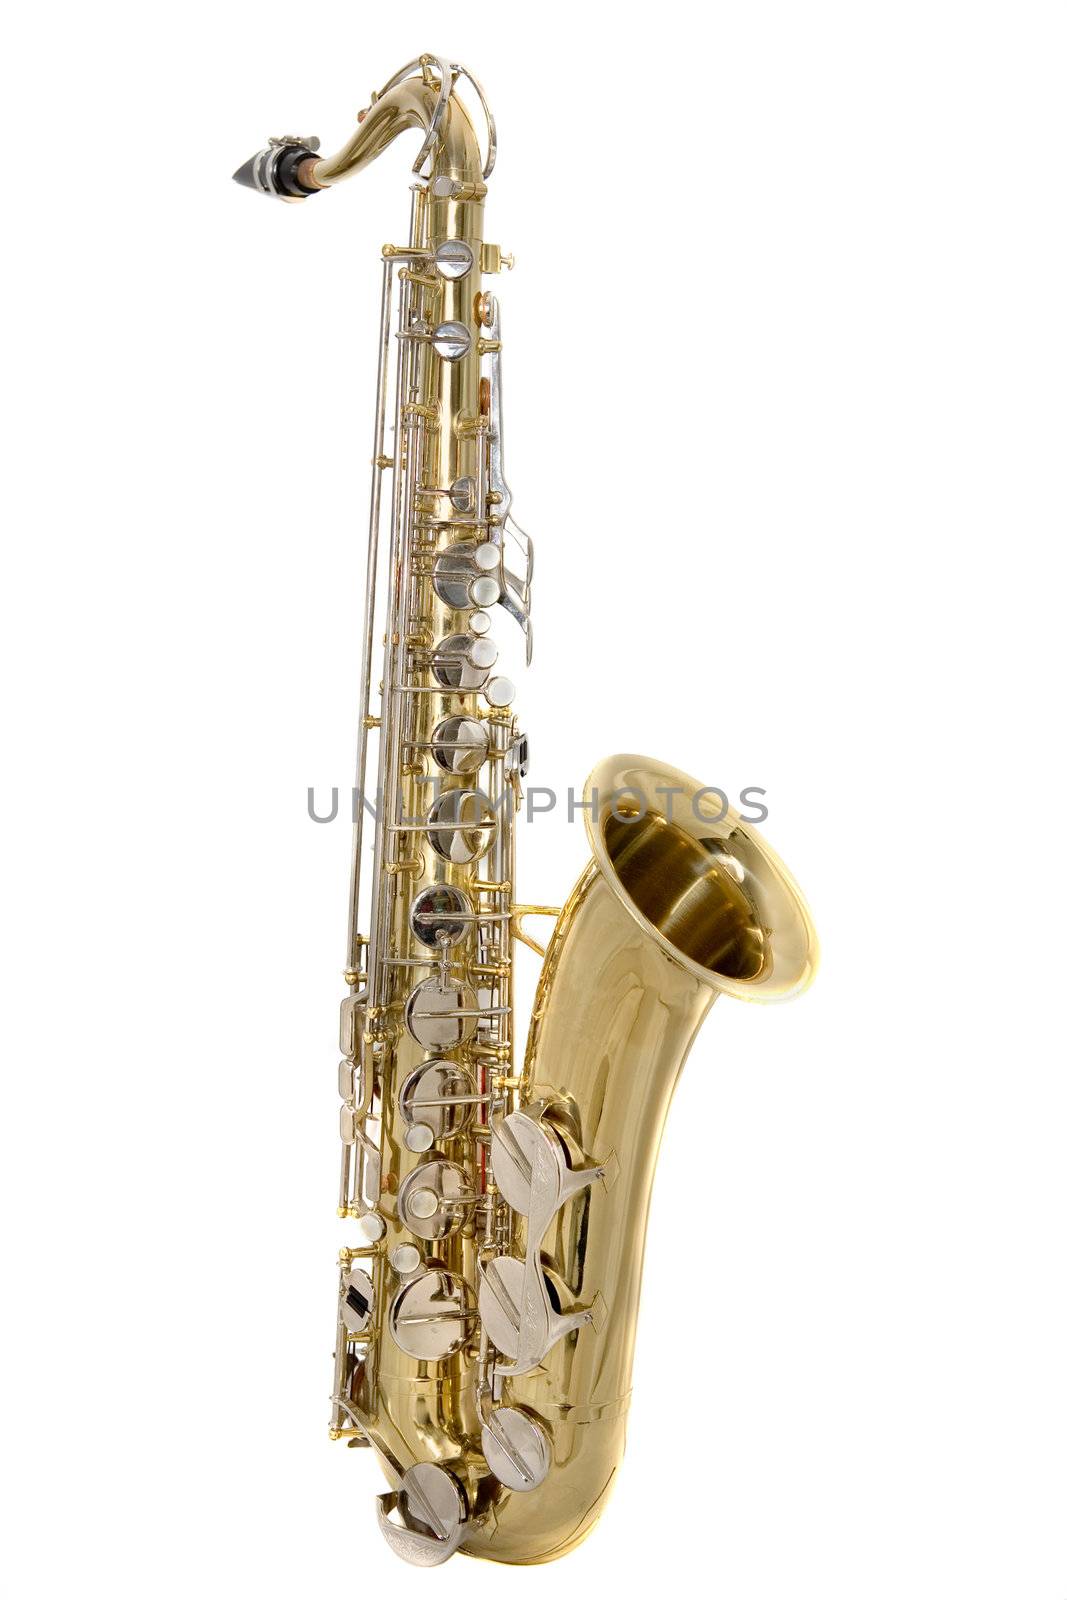 Tenor saxophone on a white background